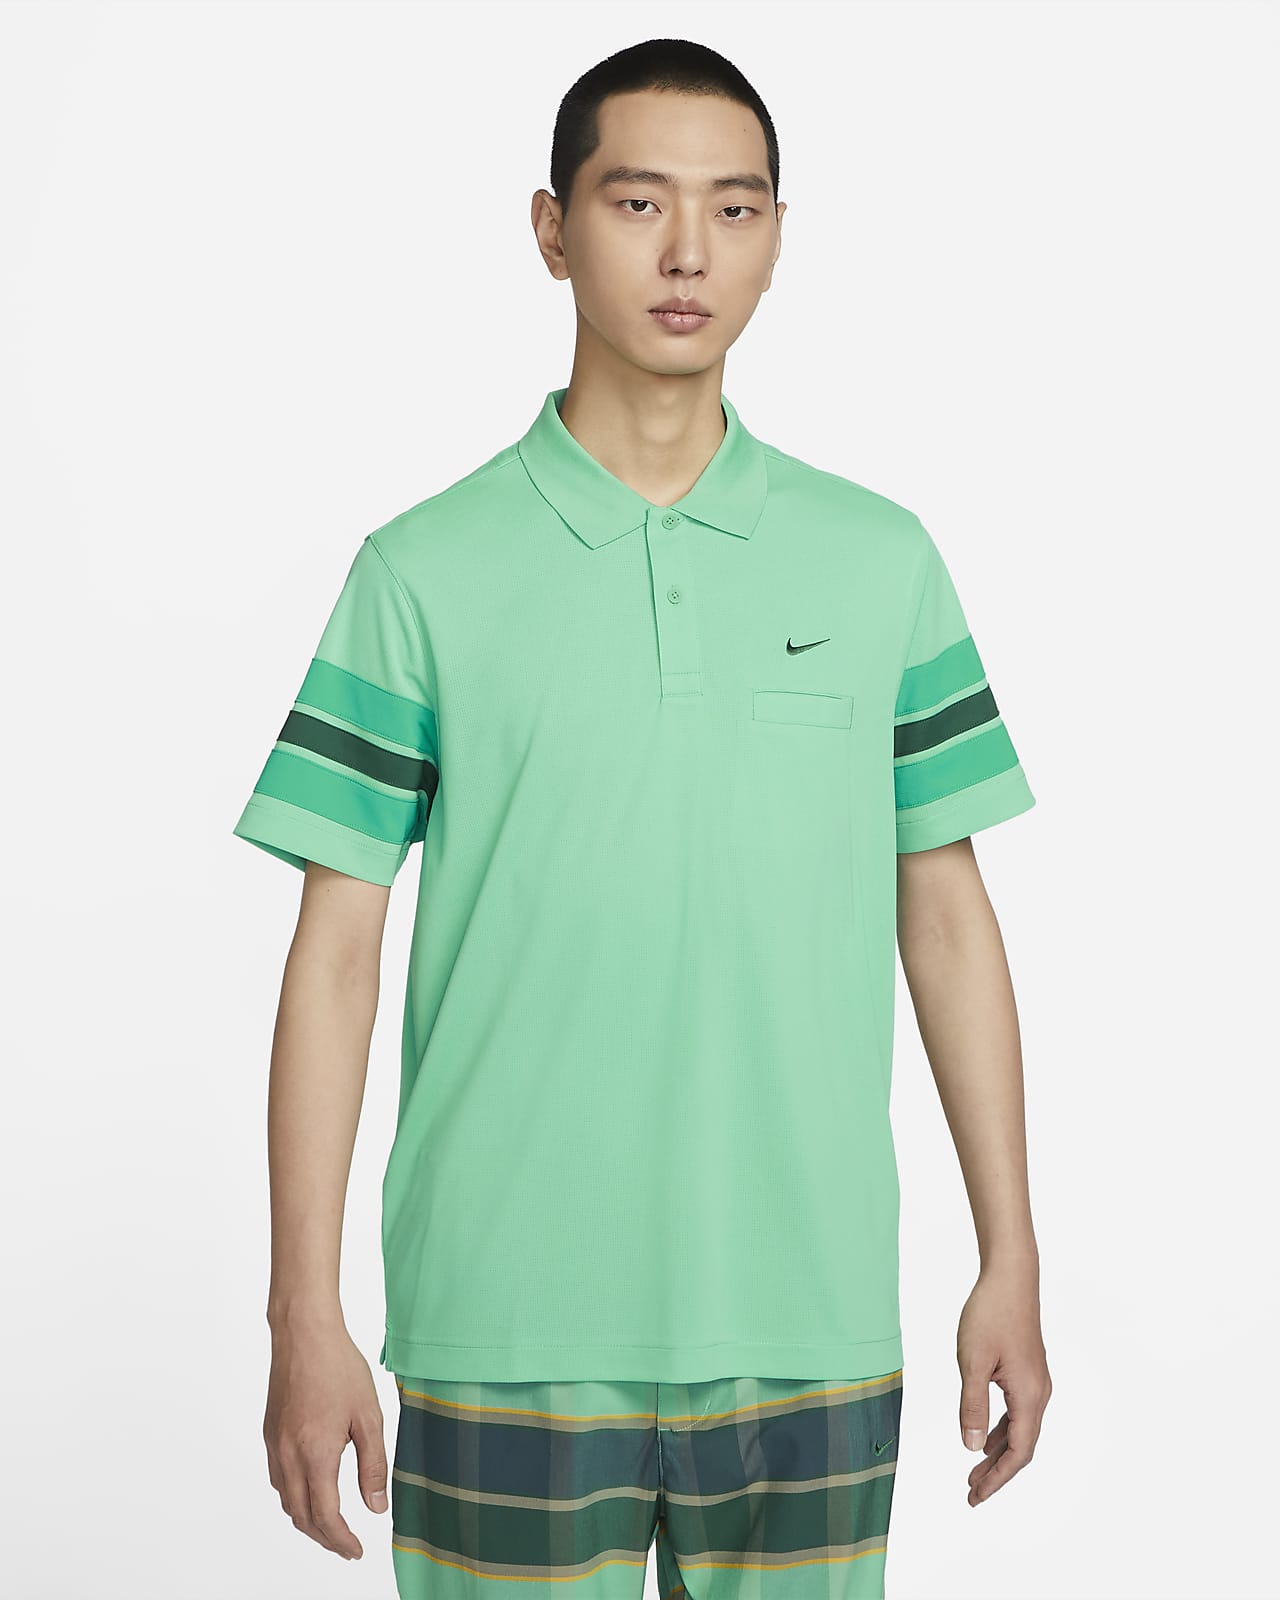 Nike Dri-FIT Unscripted Men's Golf Polo